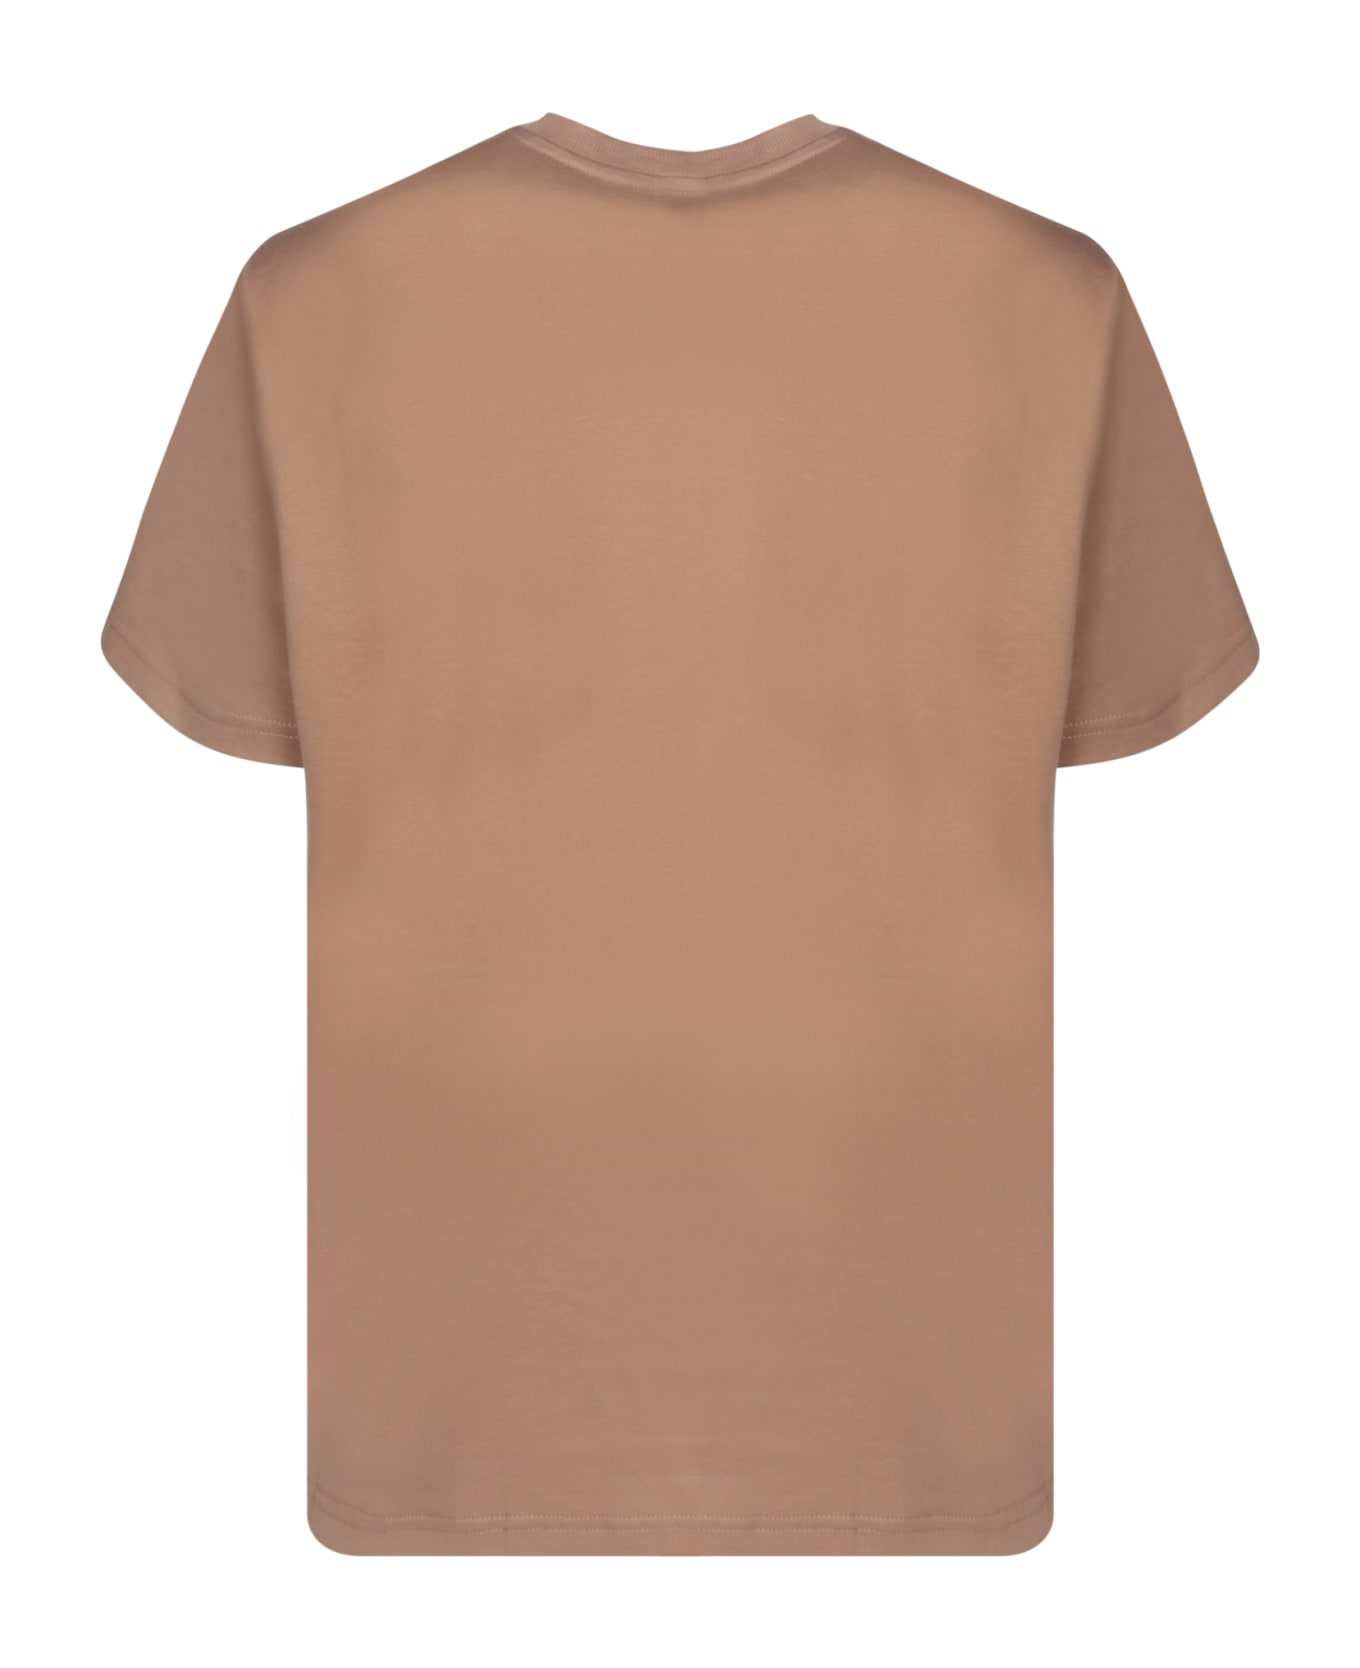 Burberry T-shirt - CAMEL